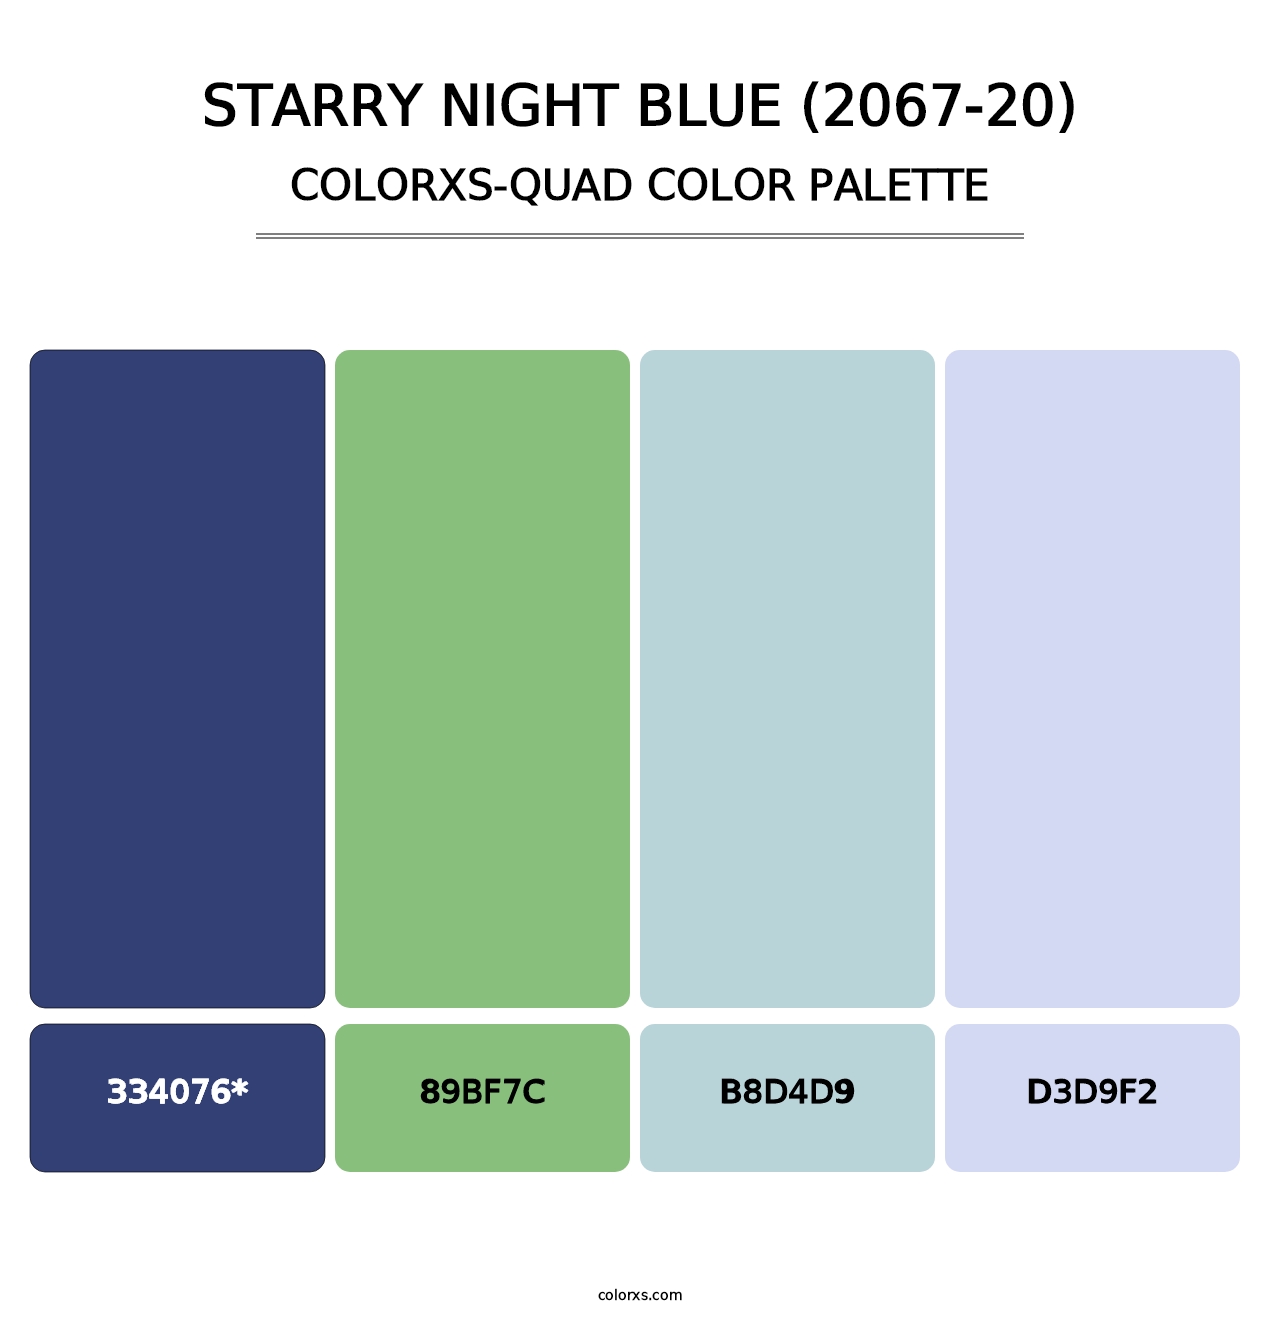 Starry Night Blue (2067-20) - Colorxs Quad Palette